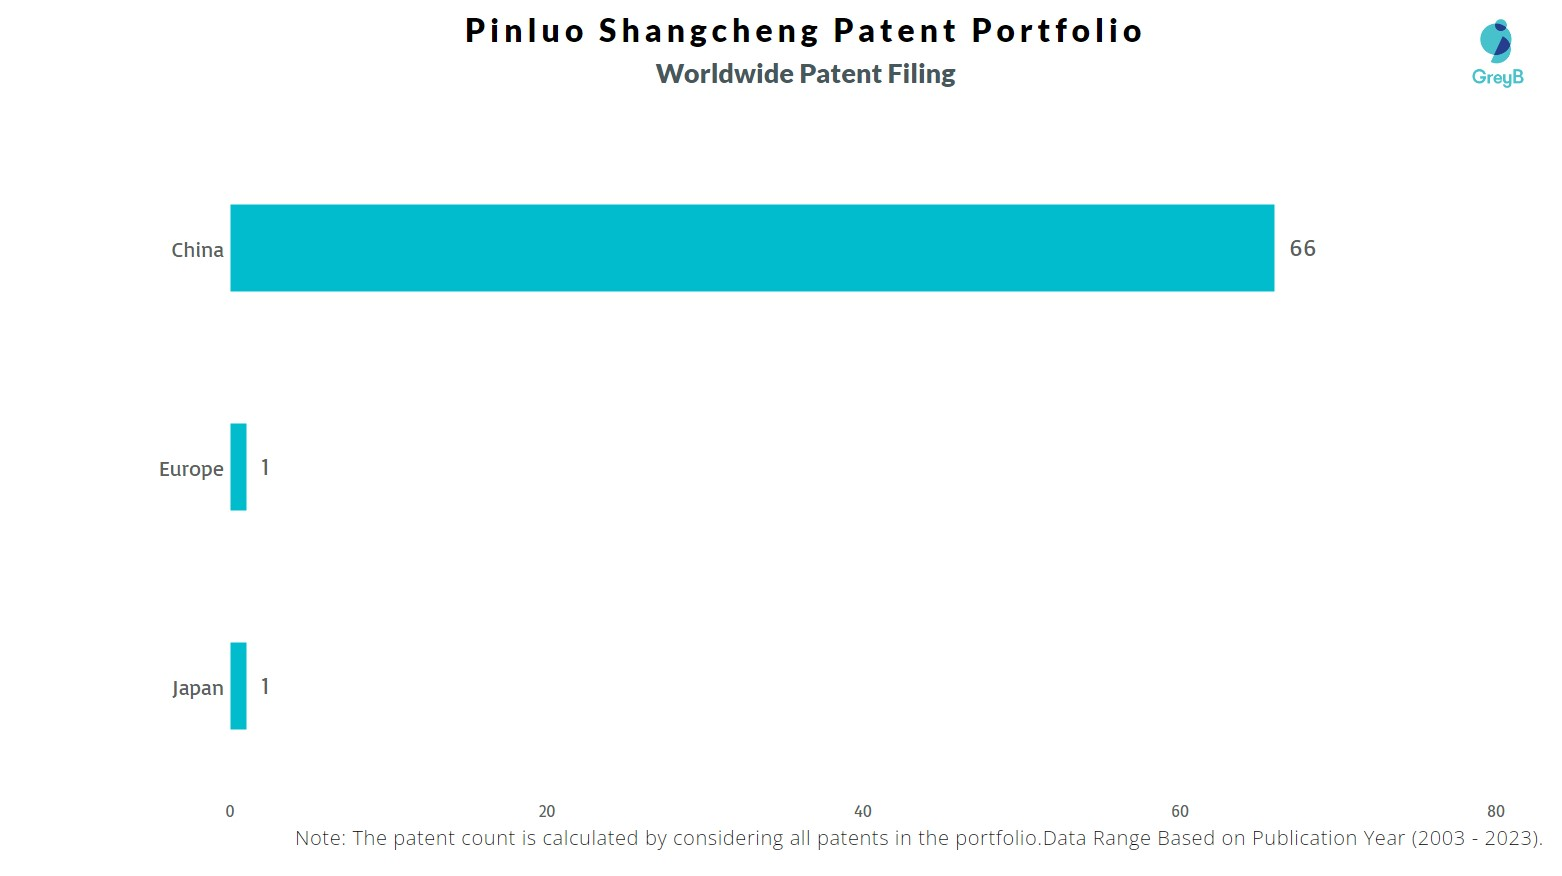 Pinluo Shangcheng Worldwide Patent Filing